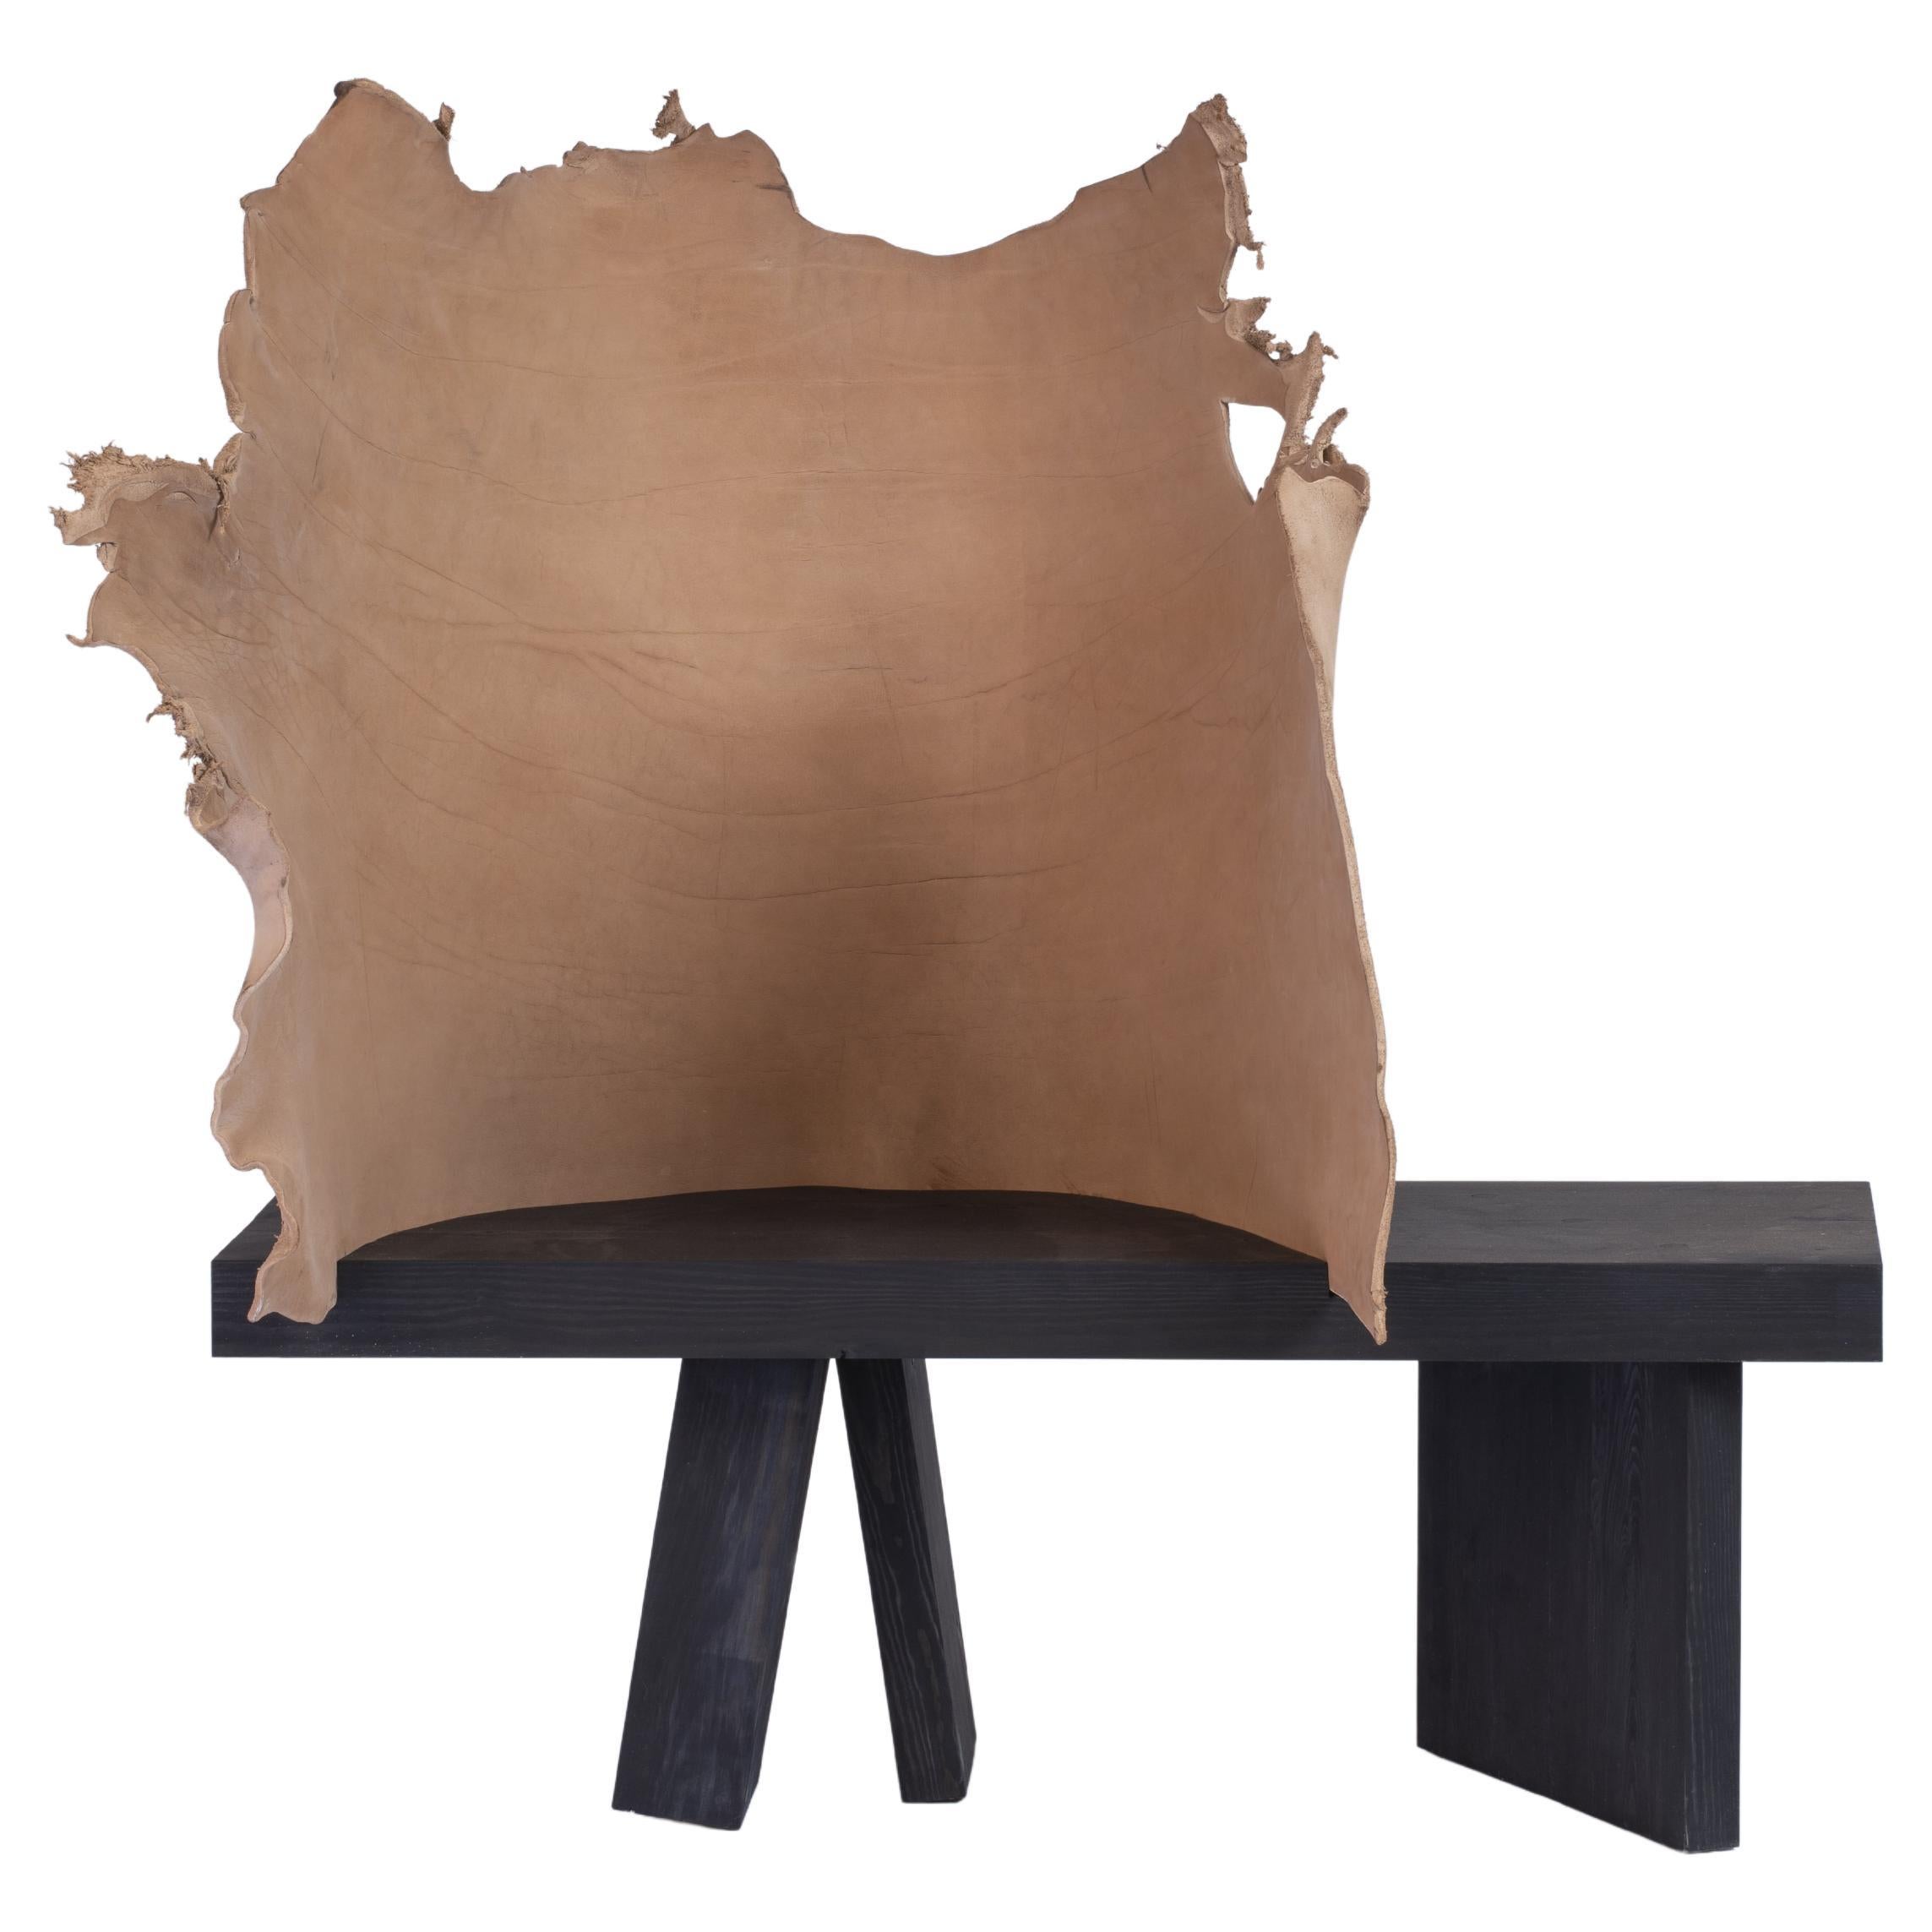 Mímesis #3 by Jordi Ribaudí, Buffalo Leather Sculptural Furniture For Sale